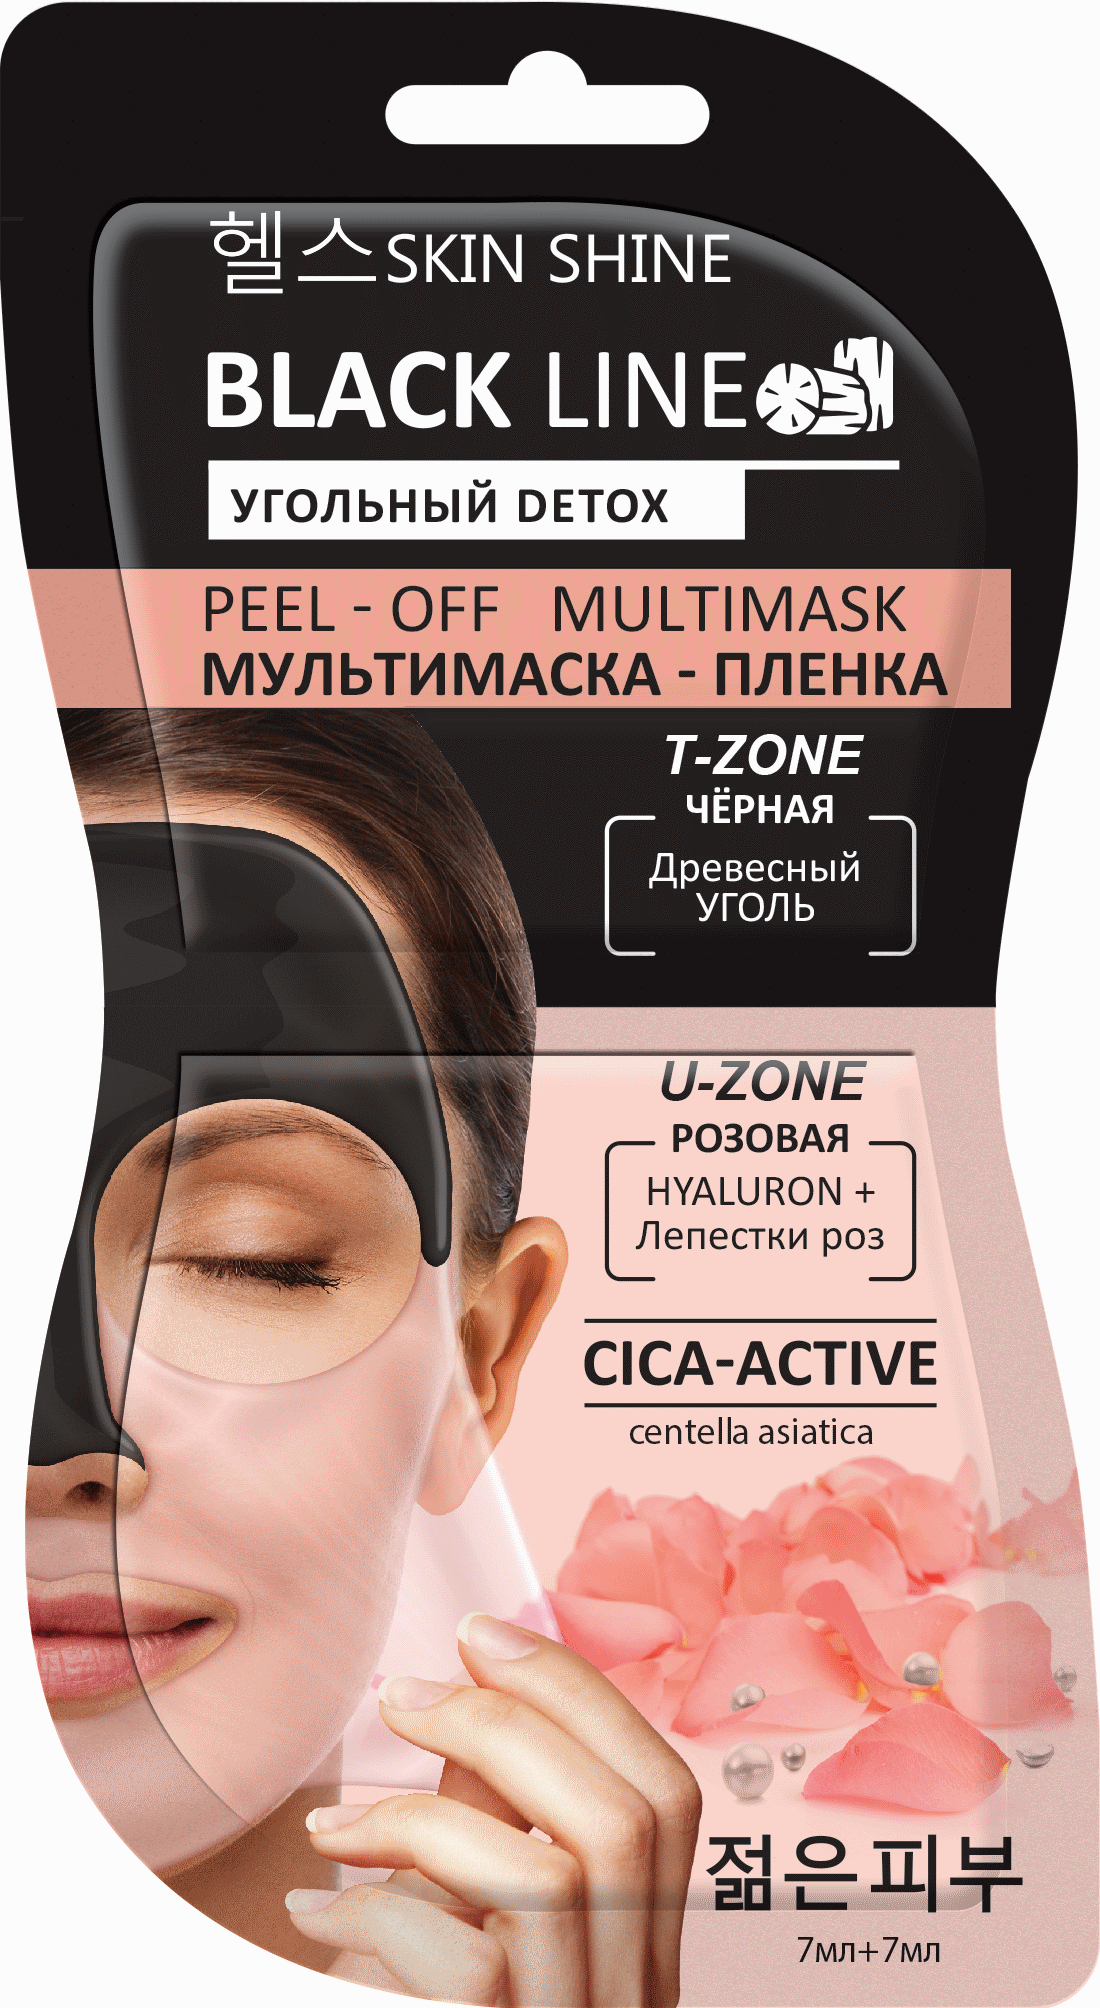 Картинка SKIN SHINE серии «BLACK LINE» Мультимаска-плёнка для лица, черная и розовая маски-пленки, 2 маски х 7 мл BeautyConceptPro